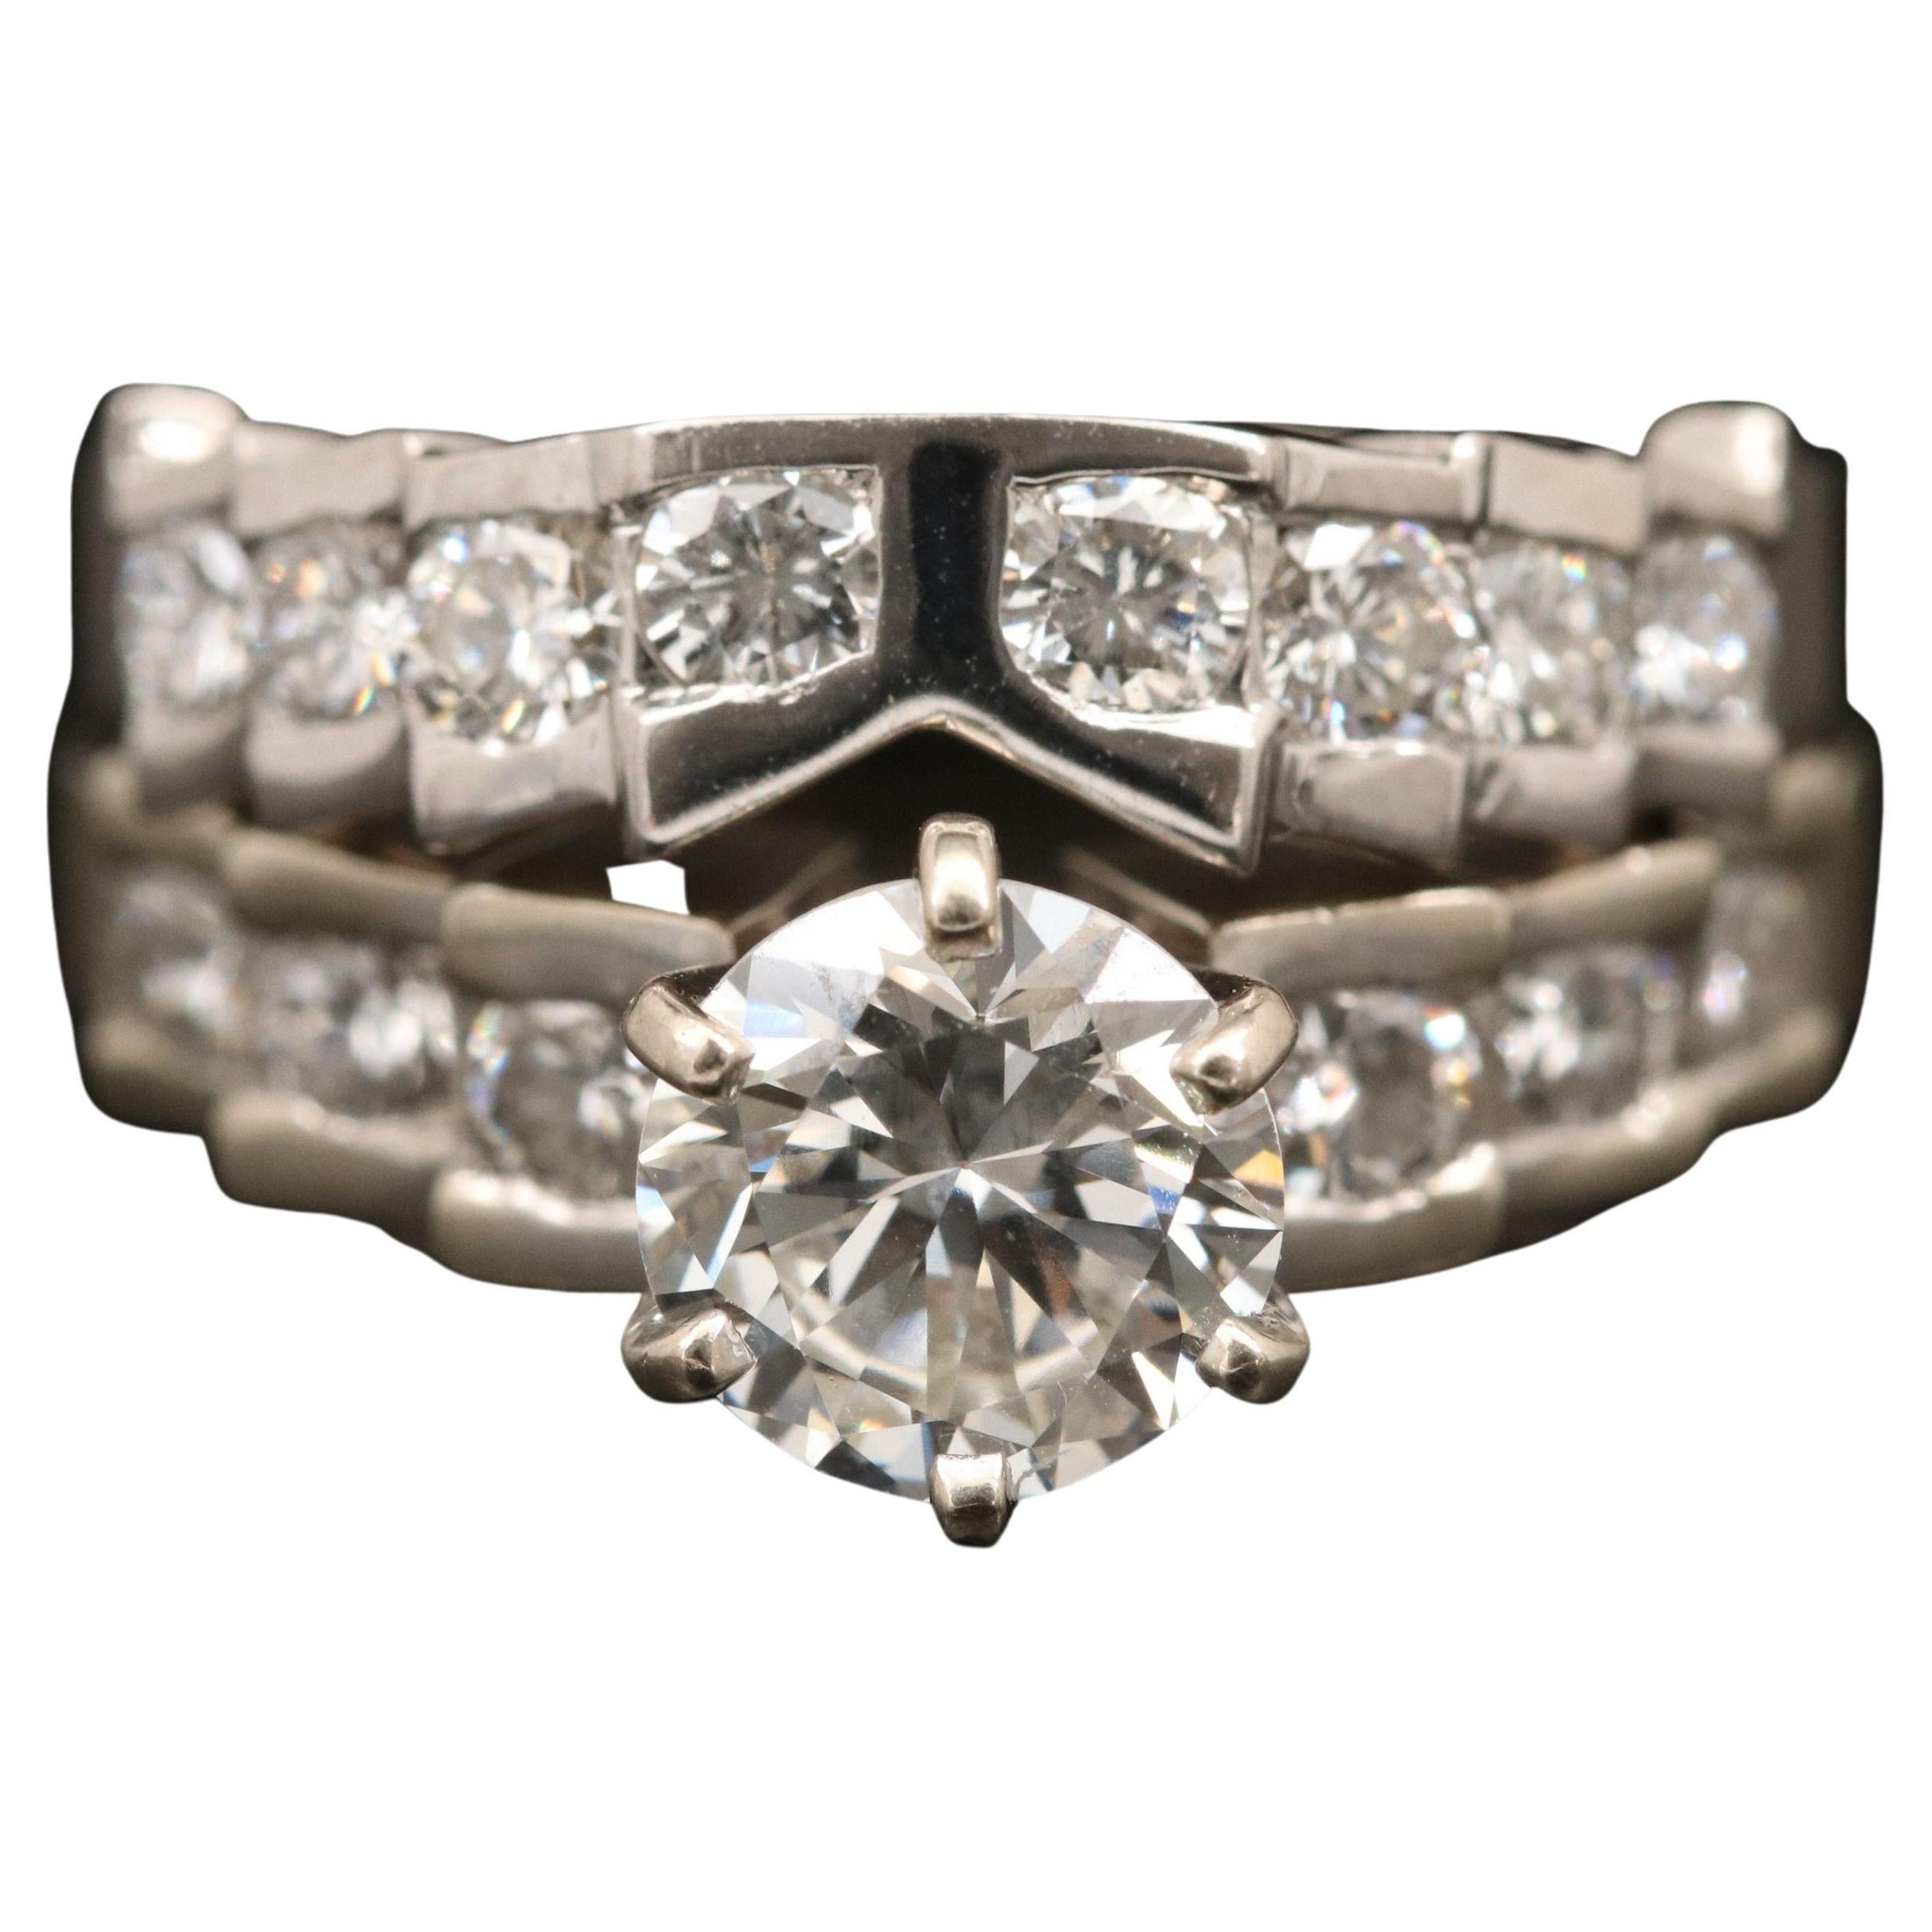 For Sale:  Natural 1.32 Carat Diamond White Gold Bridal Engagement Ring Set Wedding Ring